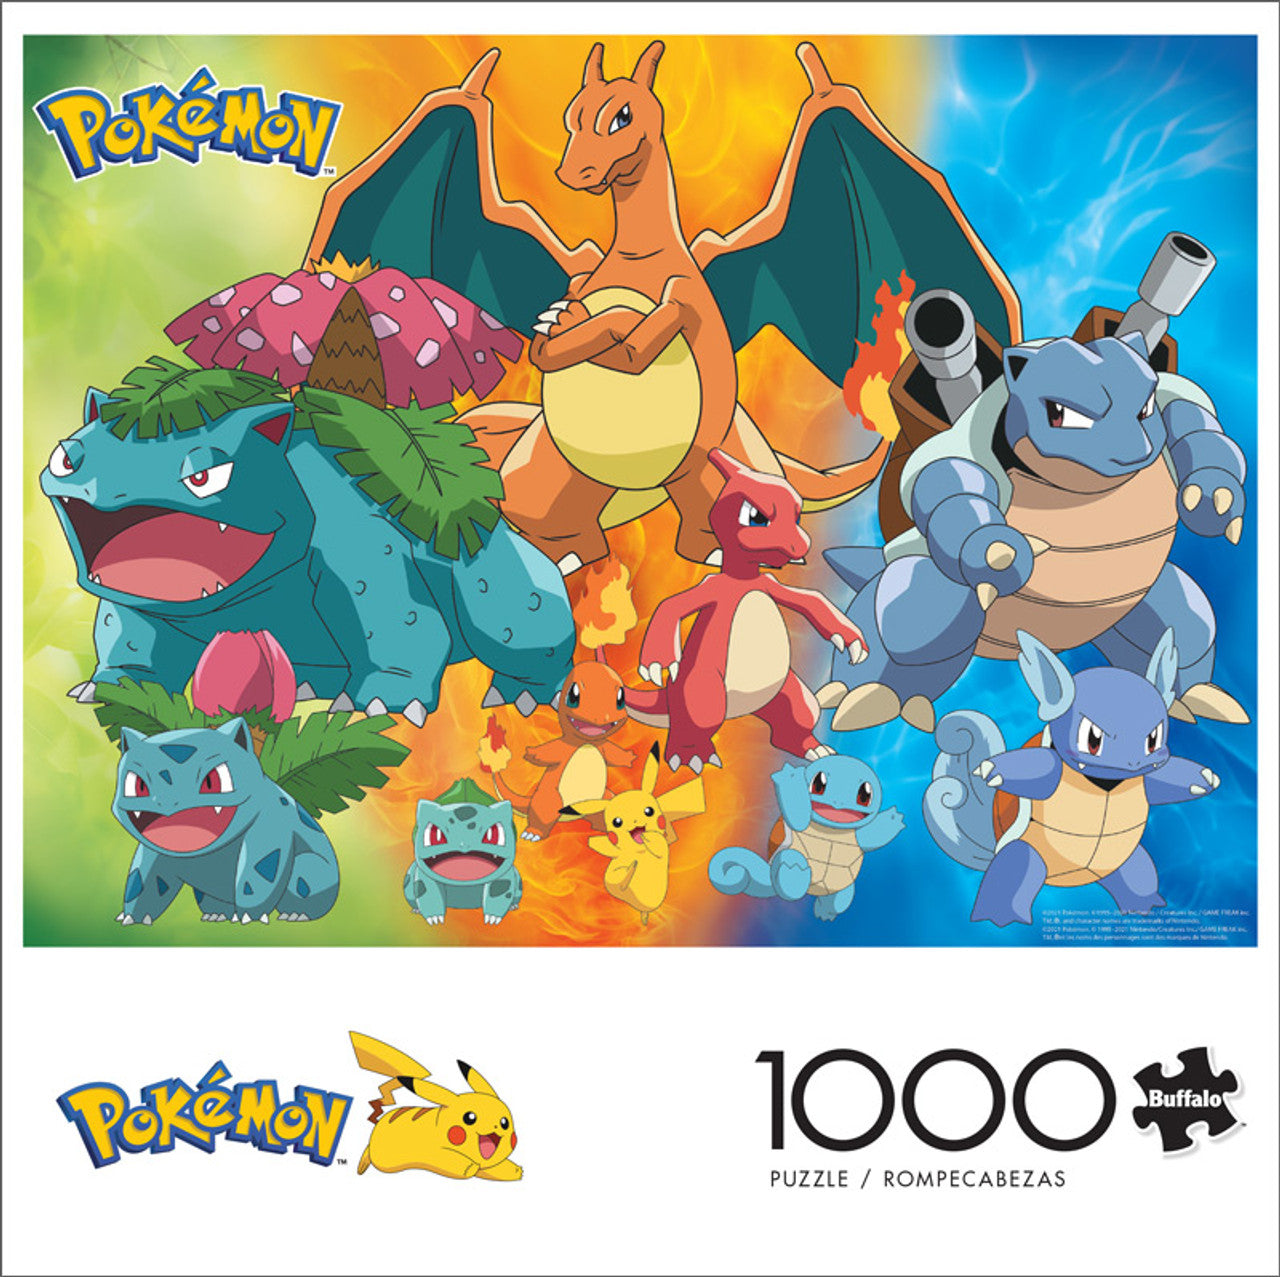 Buffalo Games - Pokemon Kanto Region Evolutions - 1000 Piece Jigsaw Puzzle